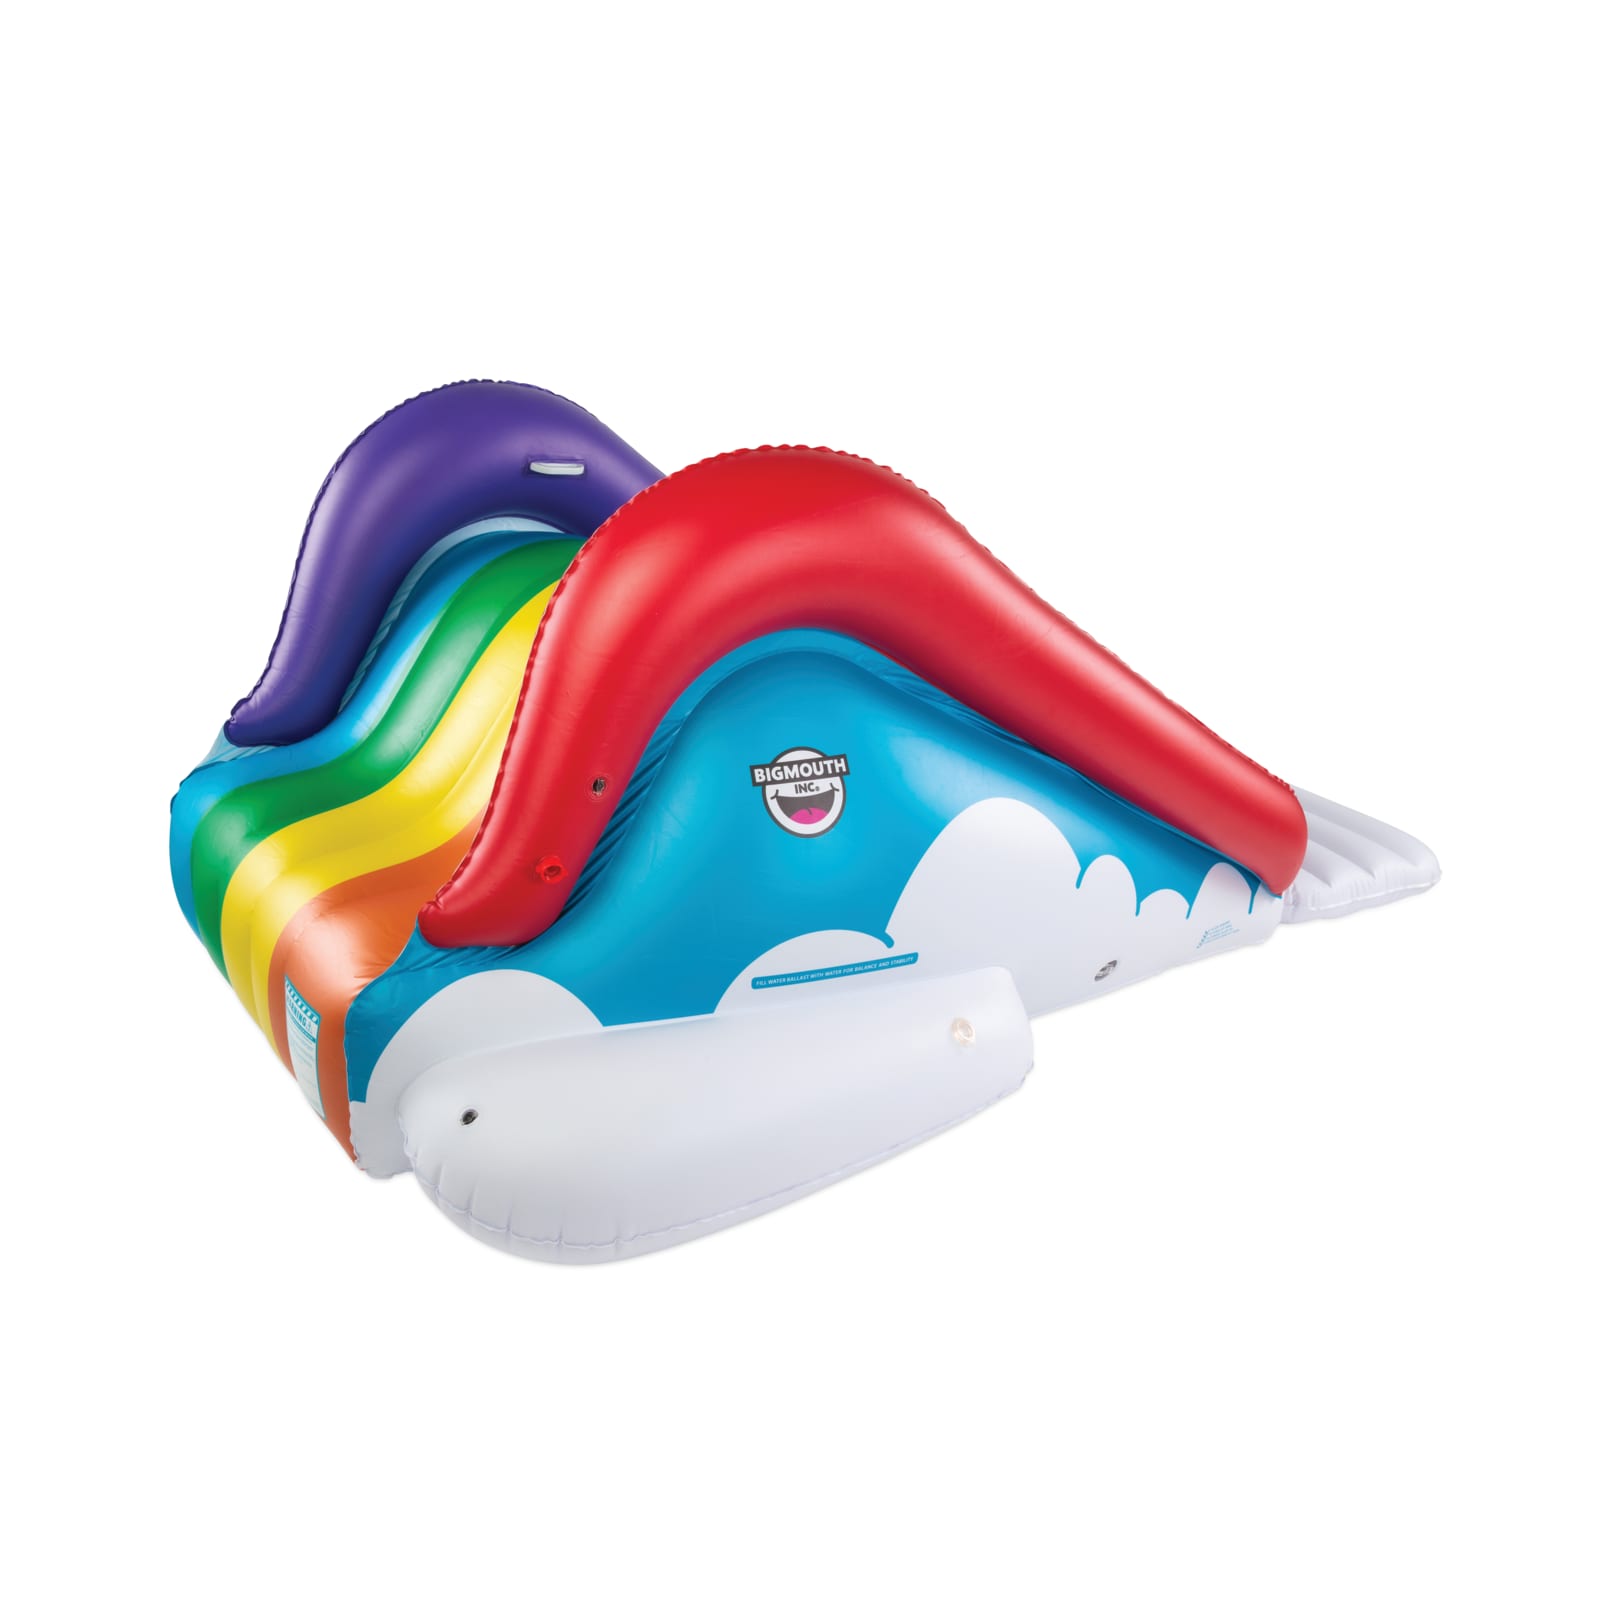 Slide Down a Rainbow Pool Slide